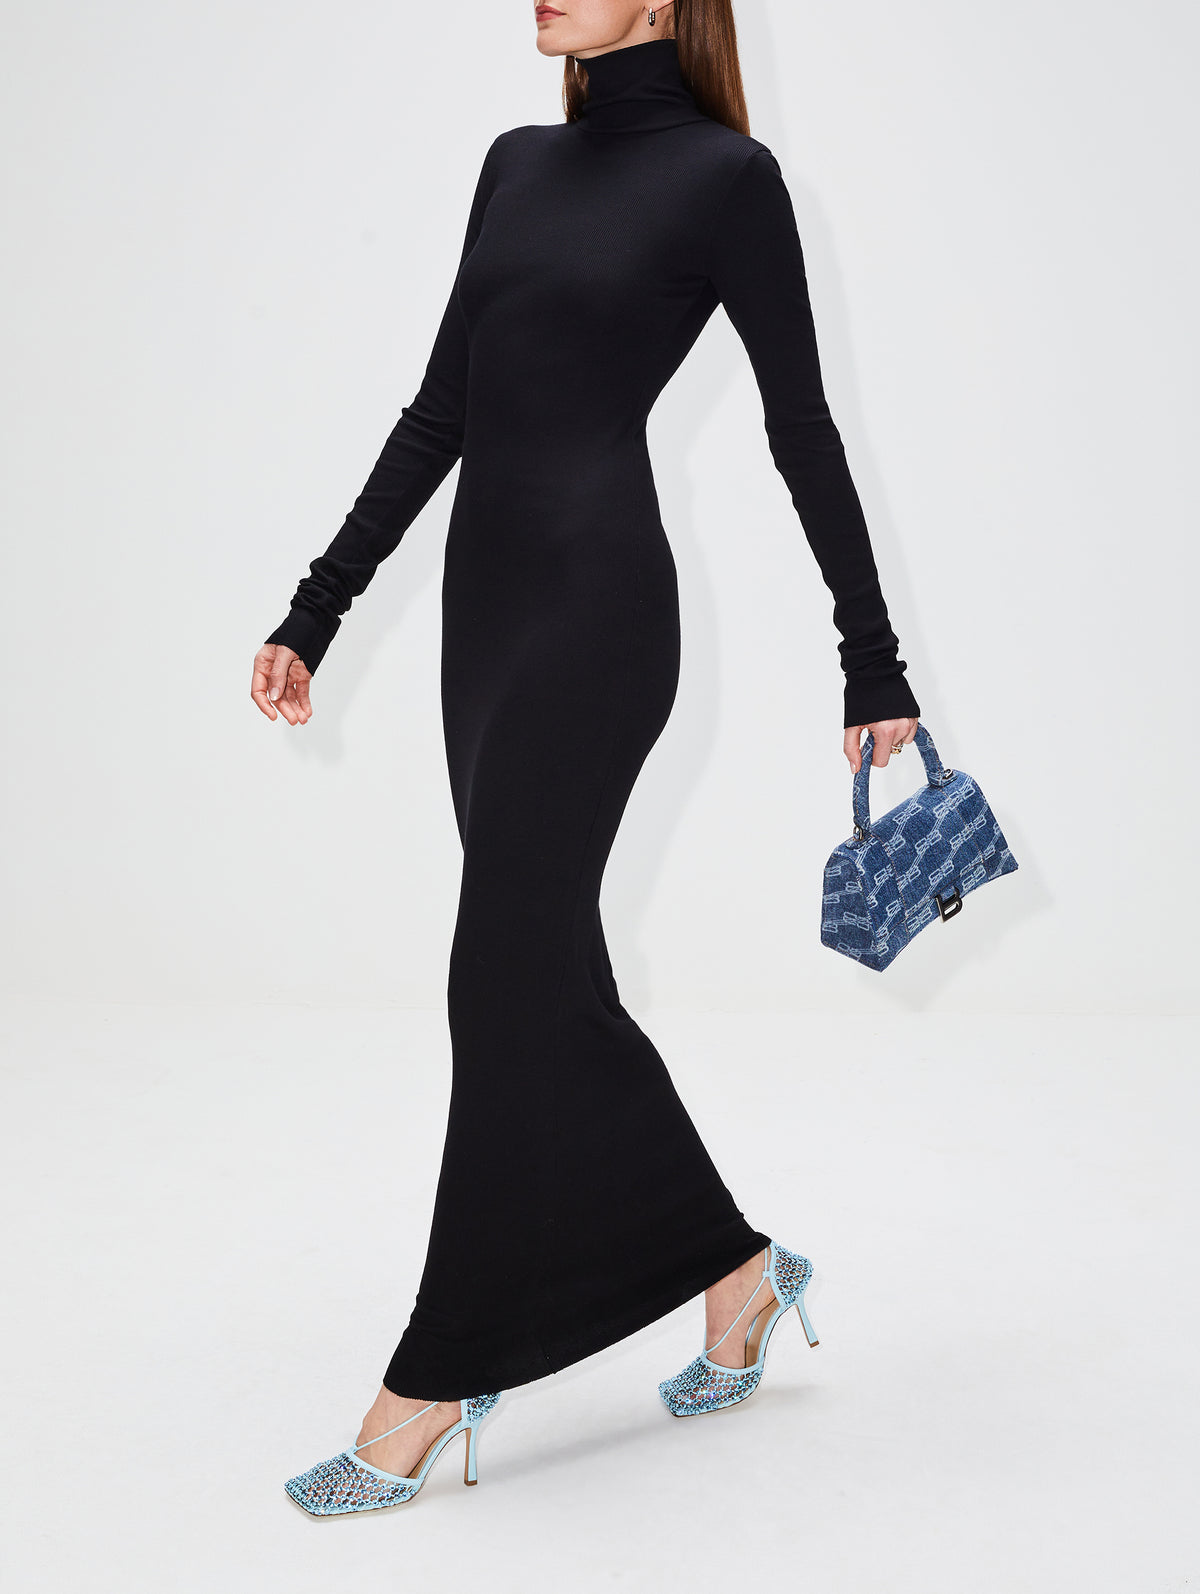 Eterne Long Sleeve Turtleneck Dress Mini - Black L